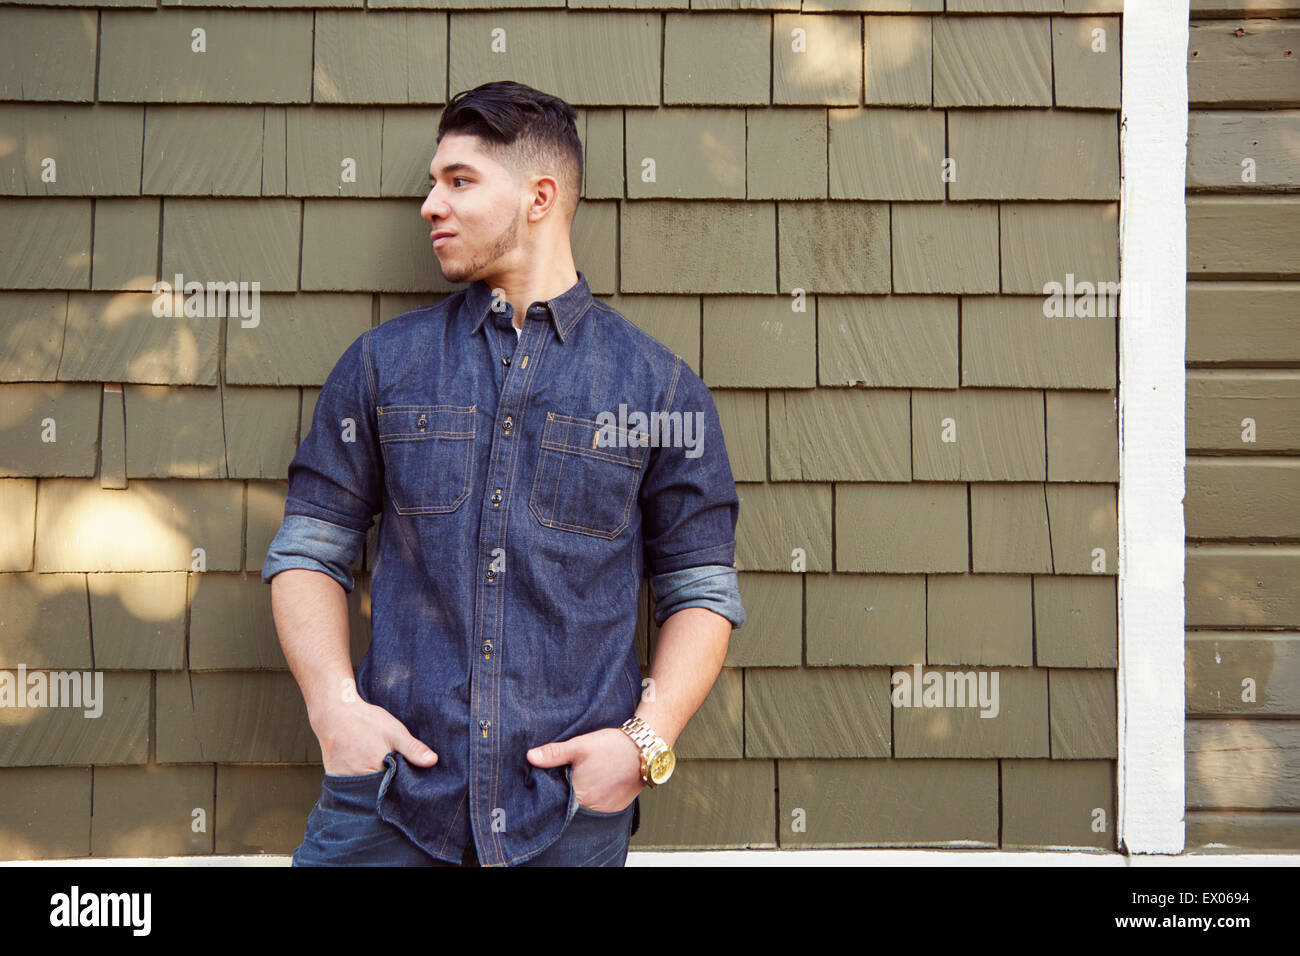 Young man by wall wearing denim shirt Stock Photo